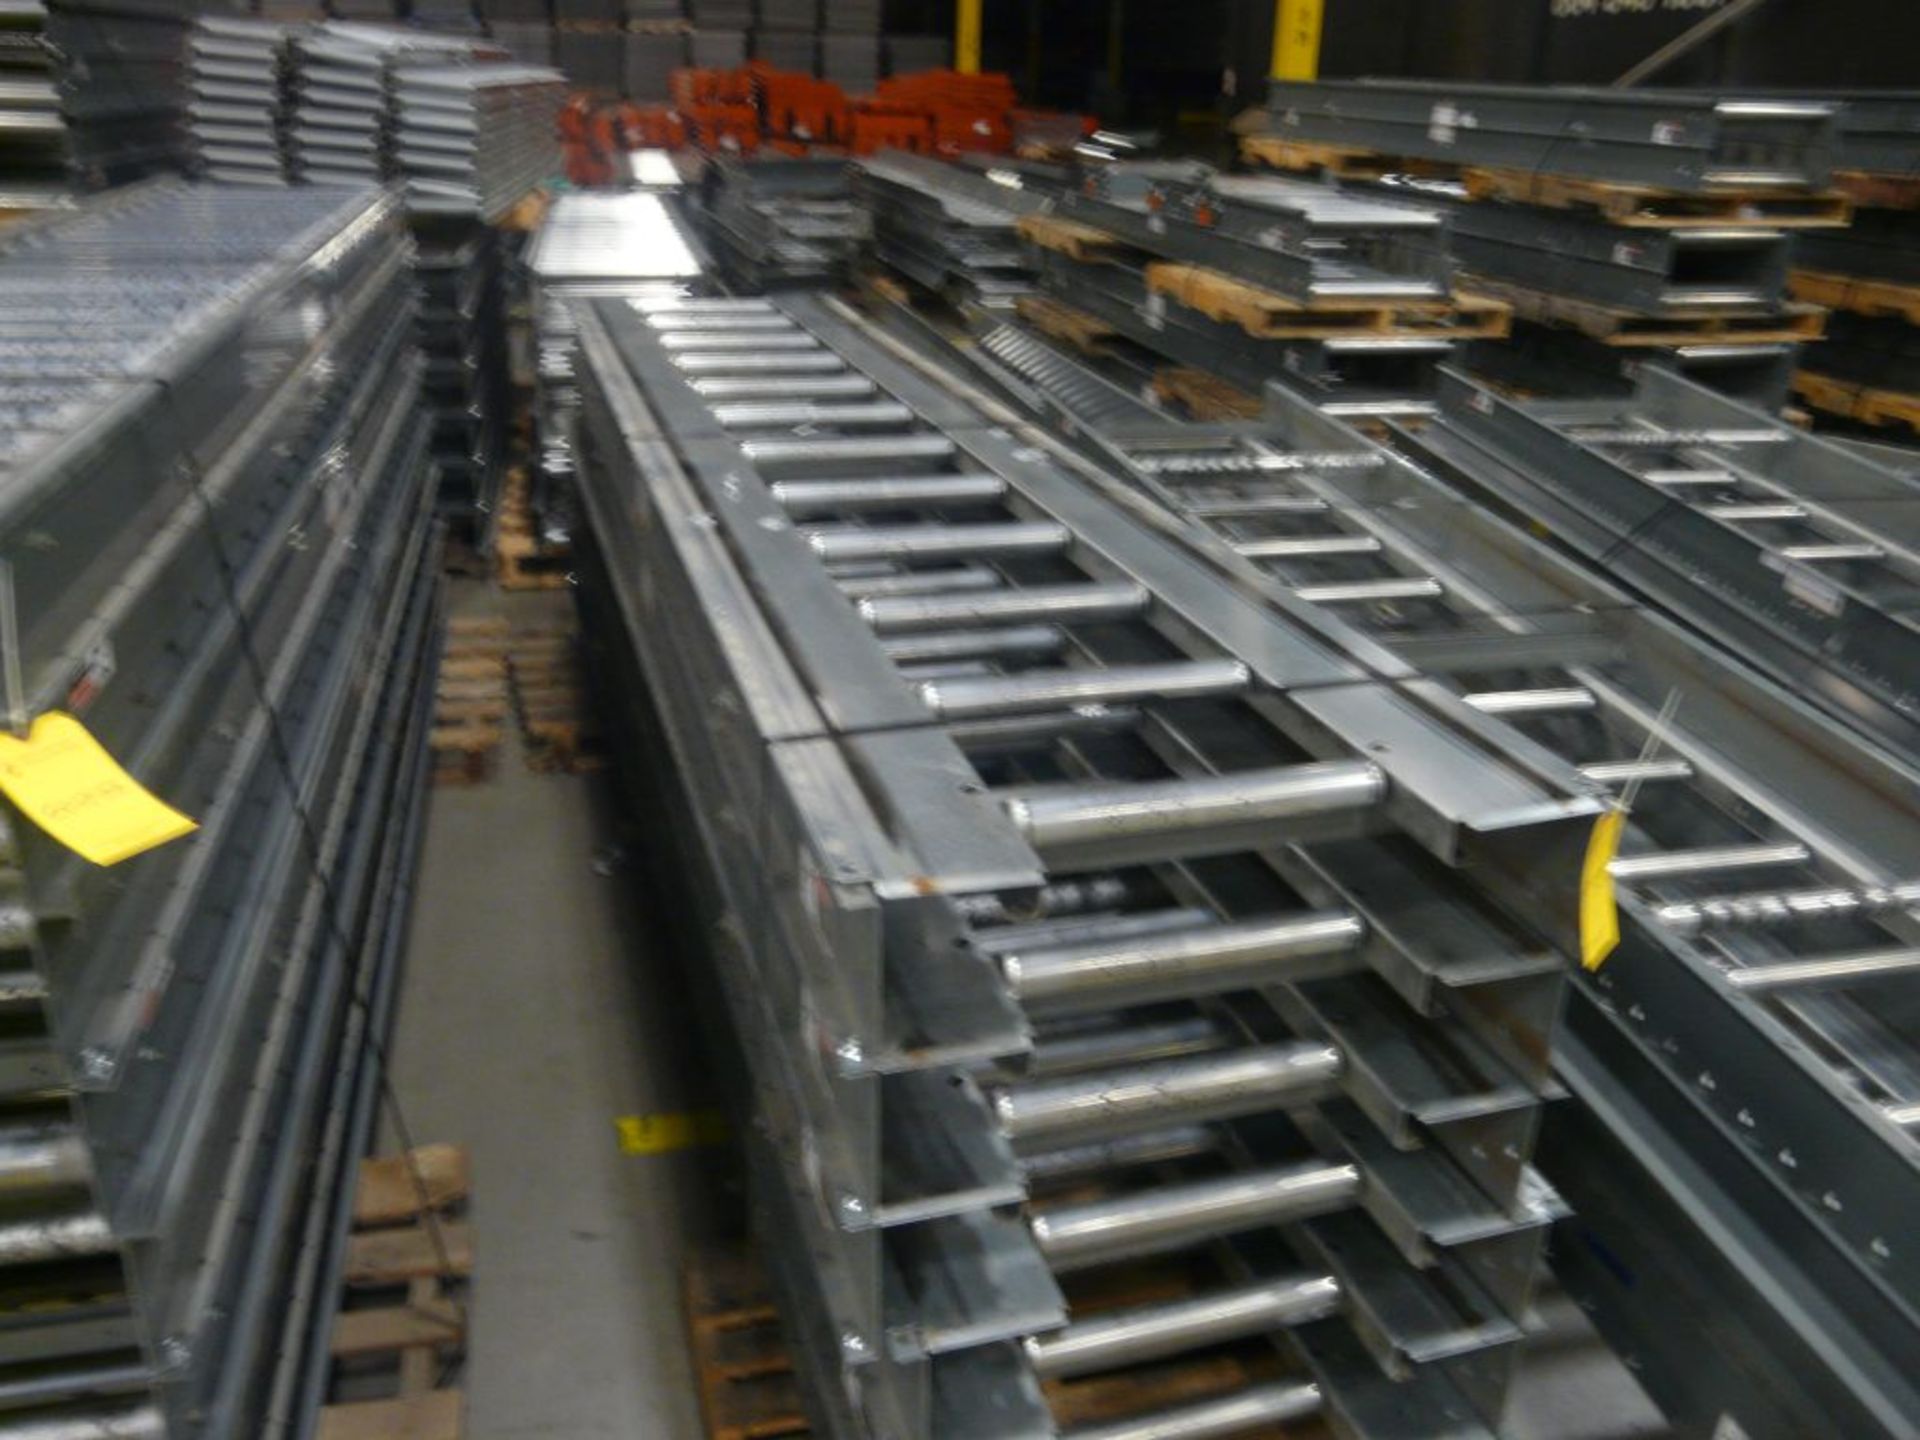 Lot of (6) 200 Belt Intermediate Conveyors - 12'L x 28"W; Tag: 223703 - $30 Lot Loading Fee - Image 3 of 4